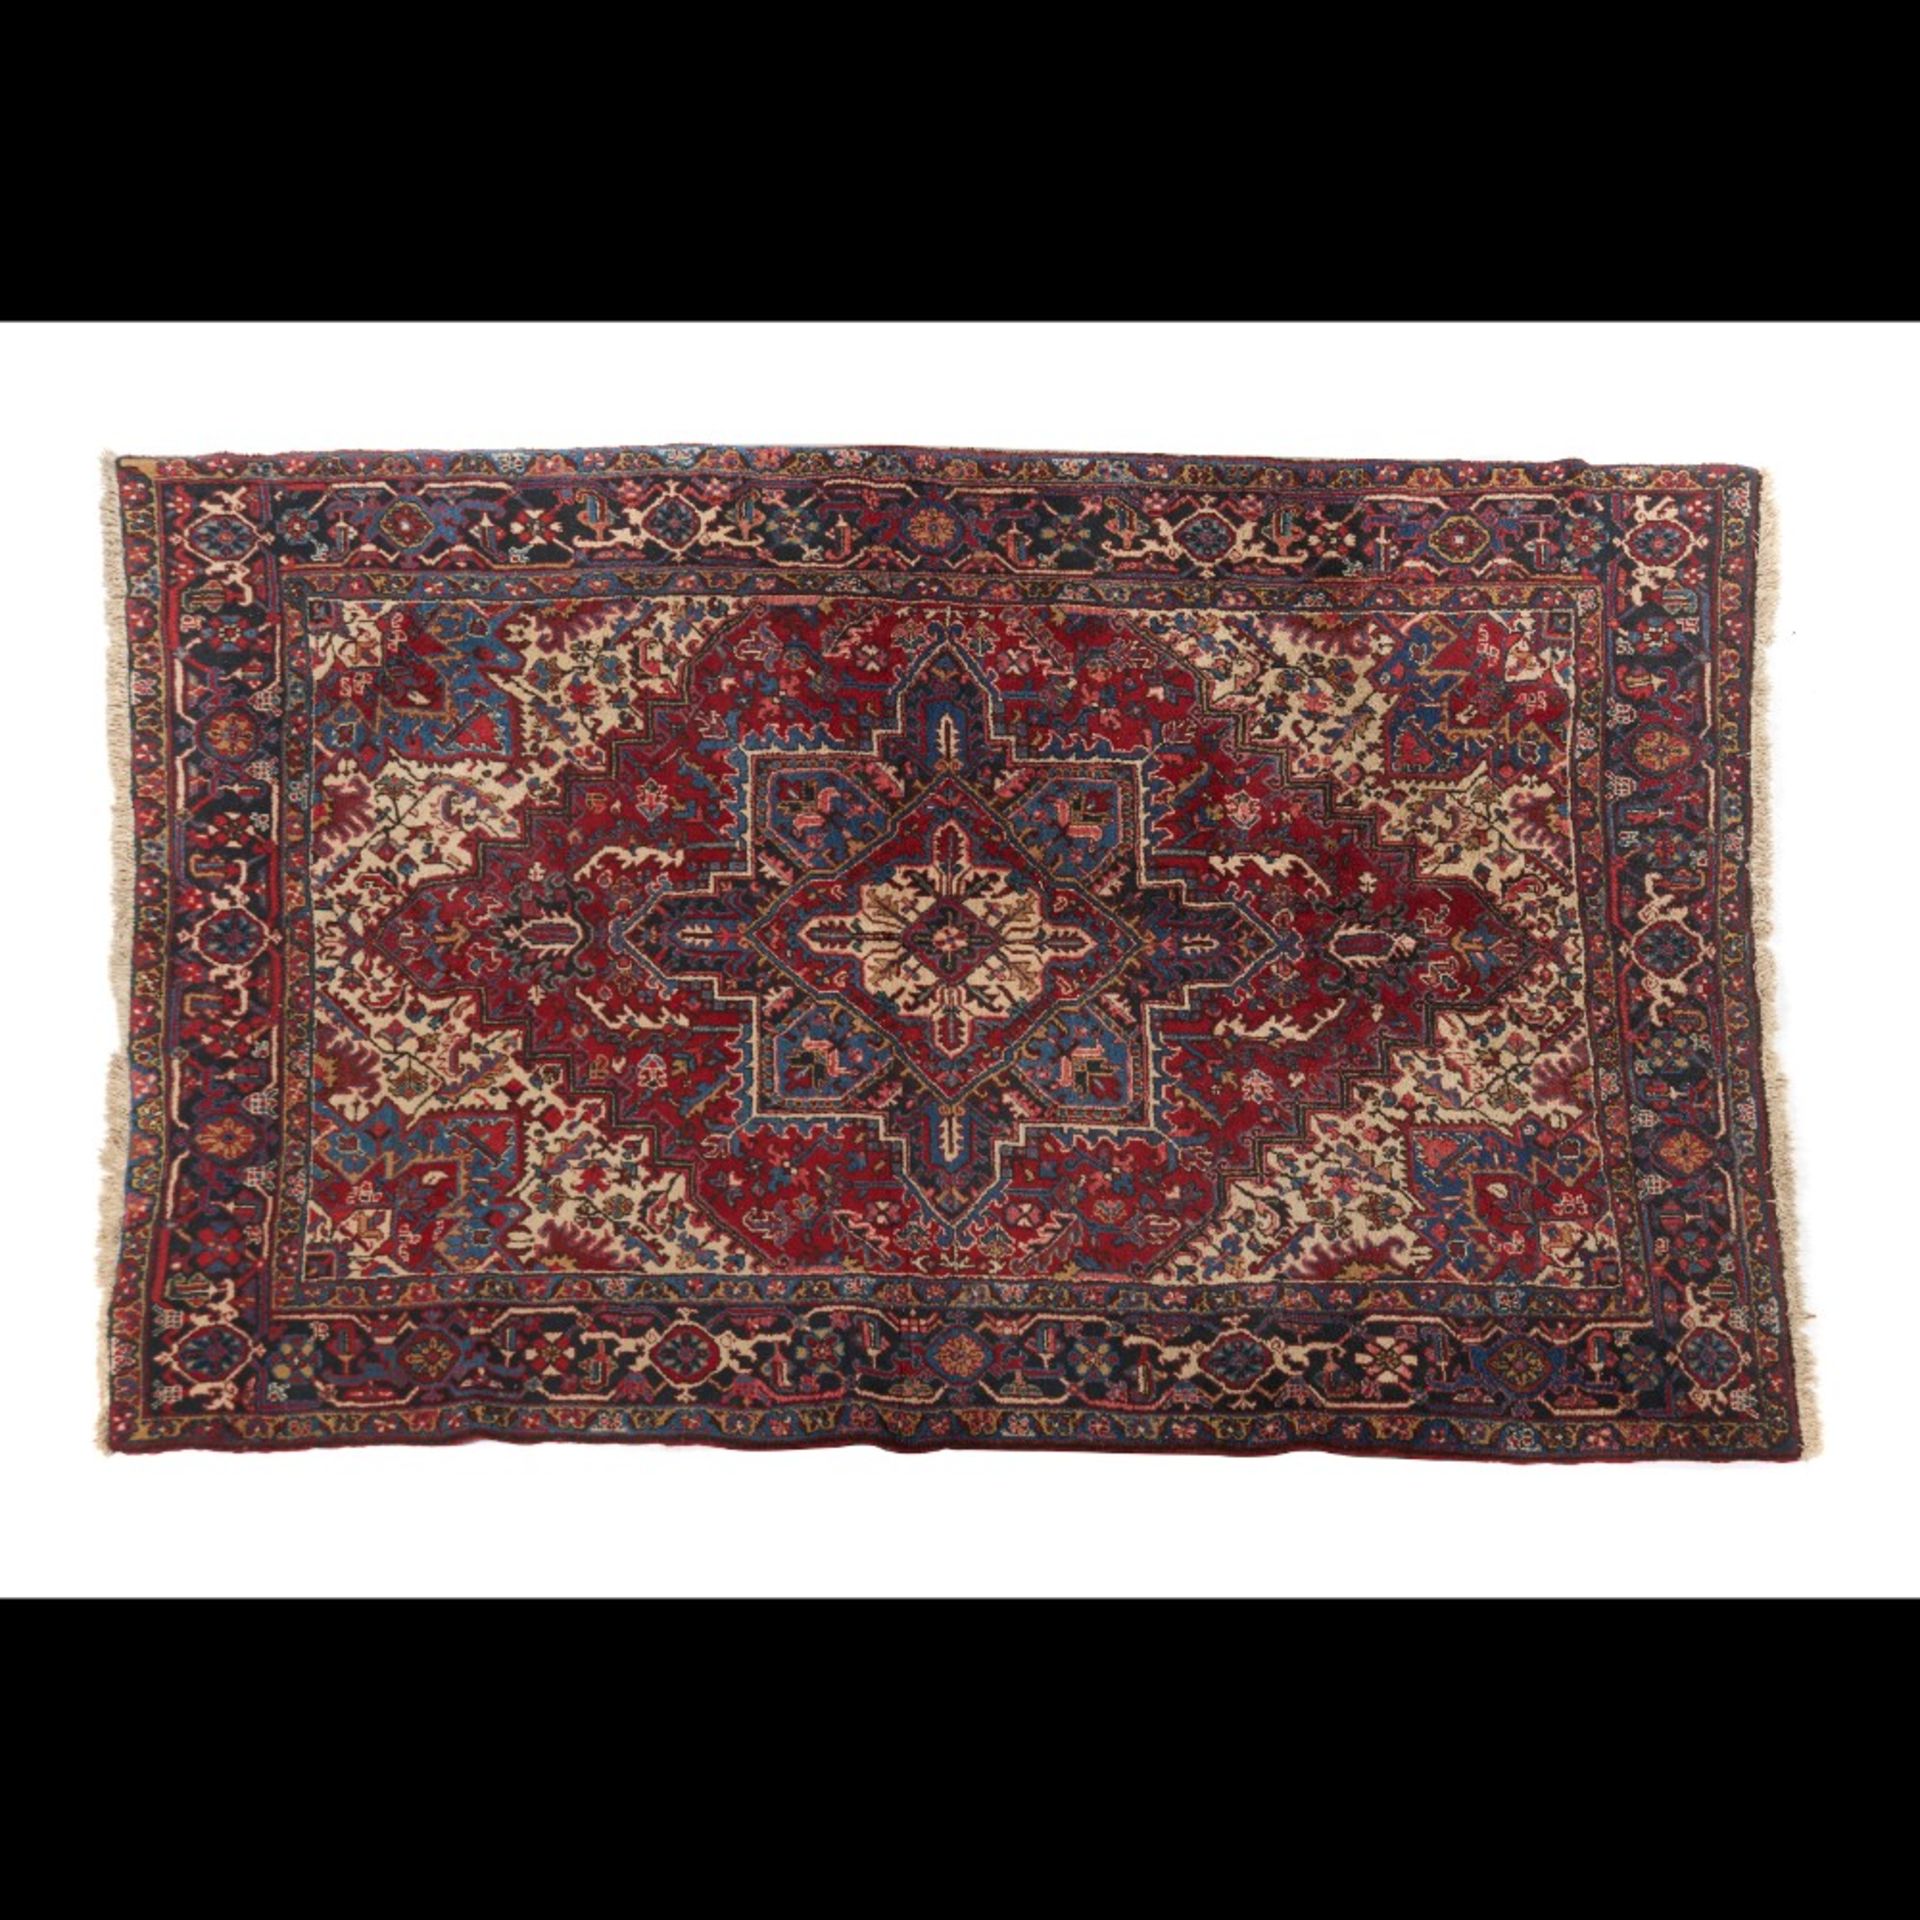  A Heriz rug, Persia